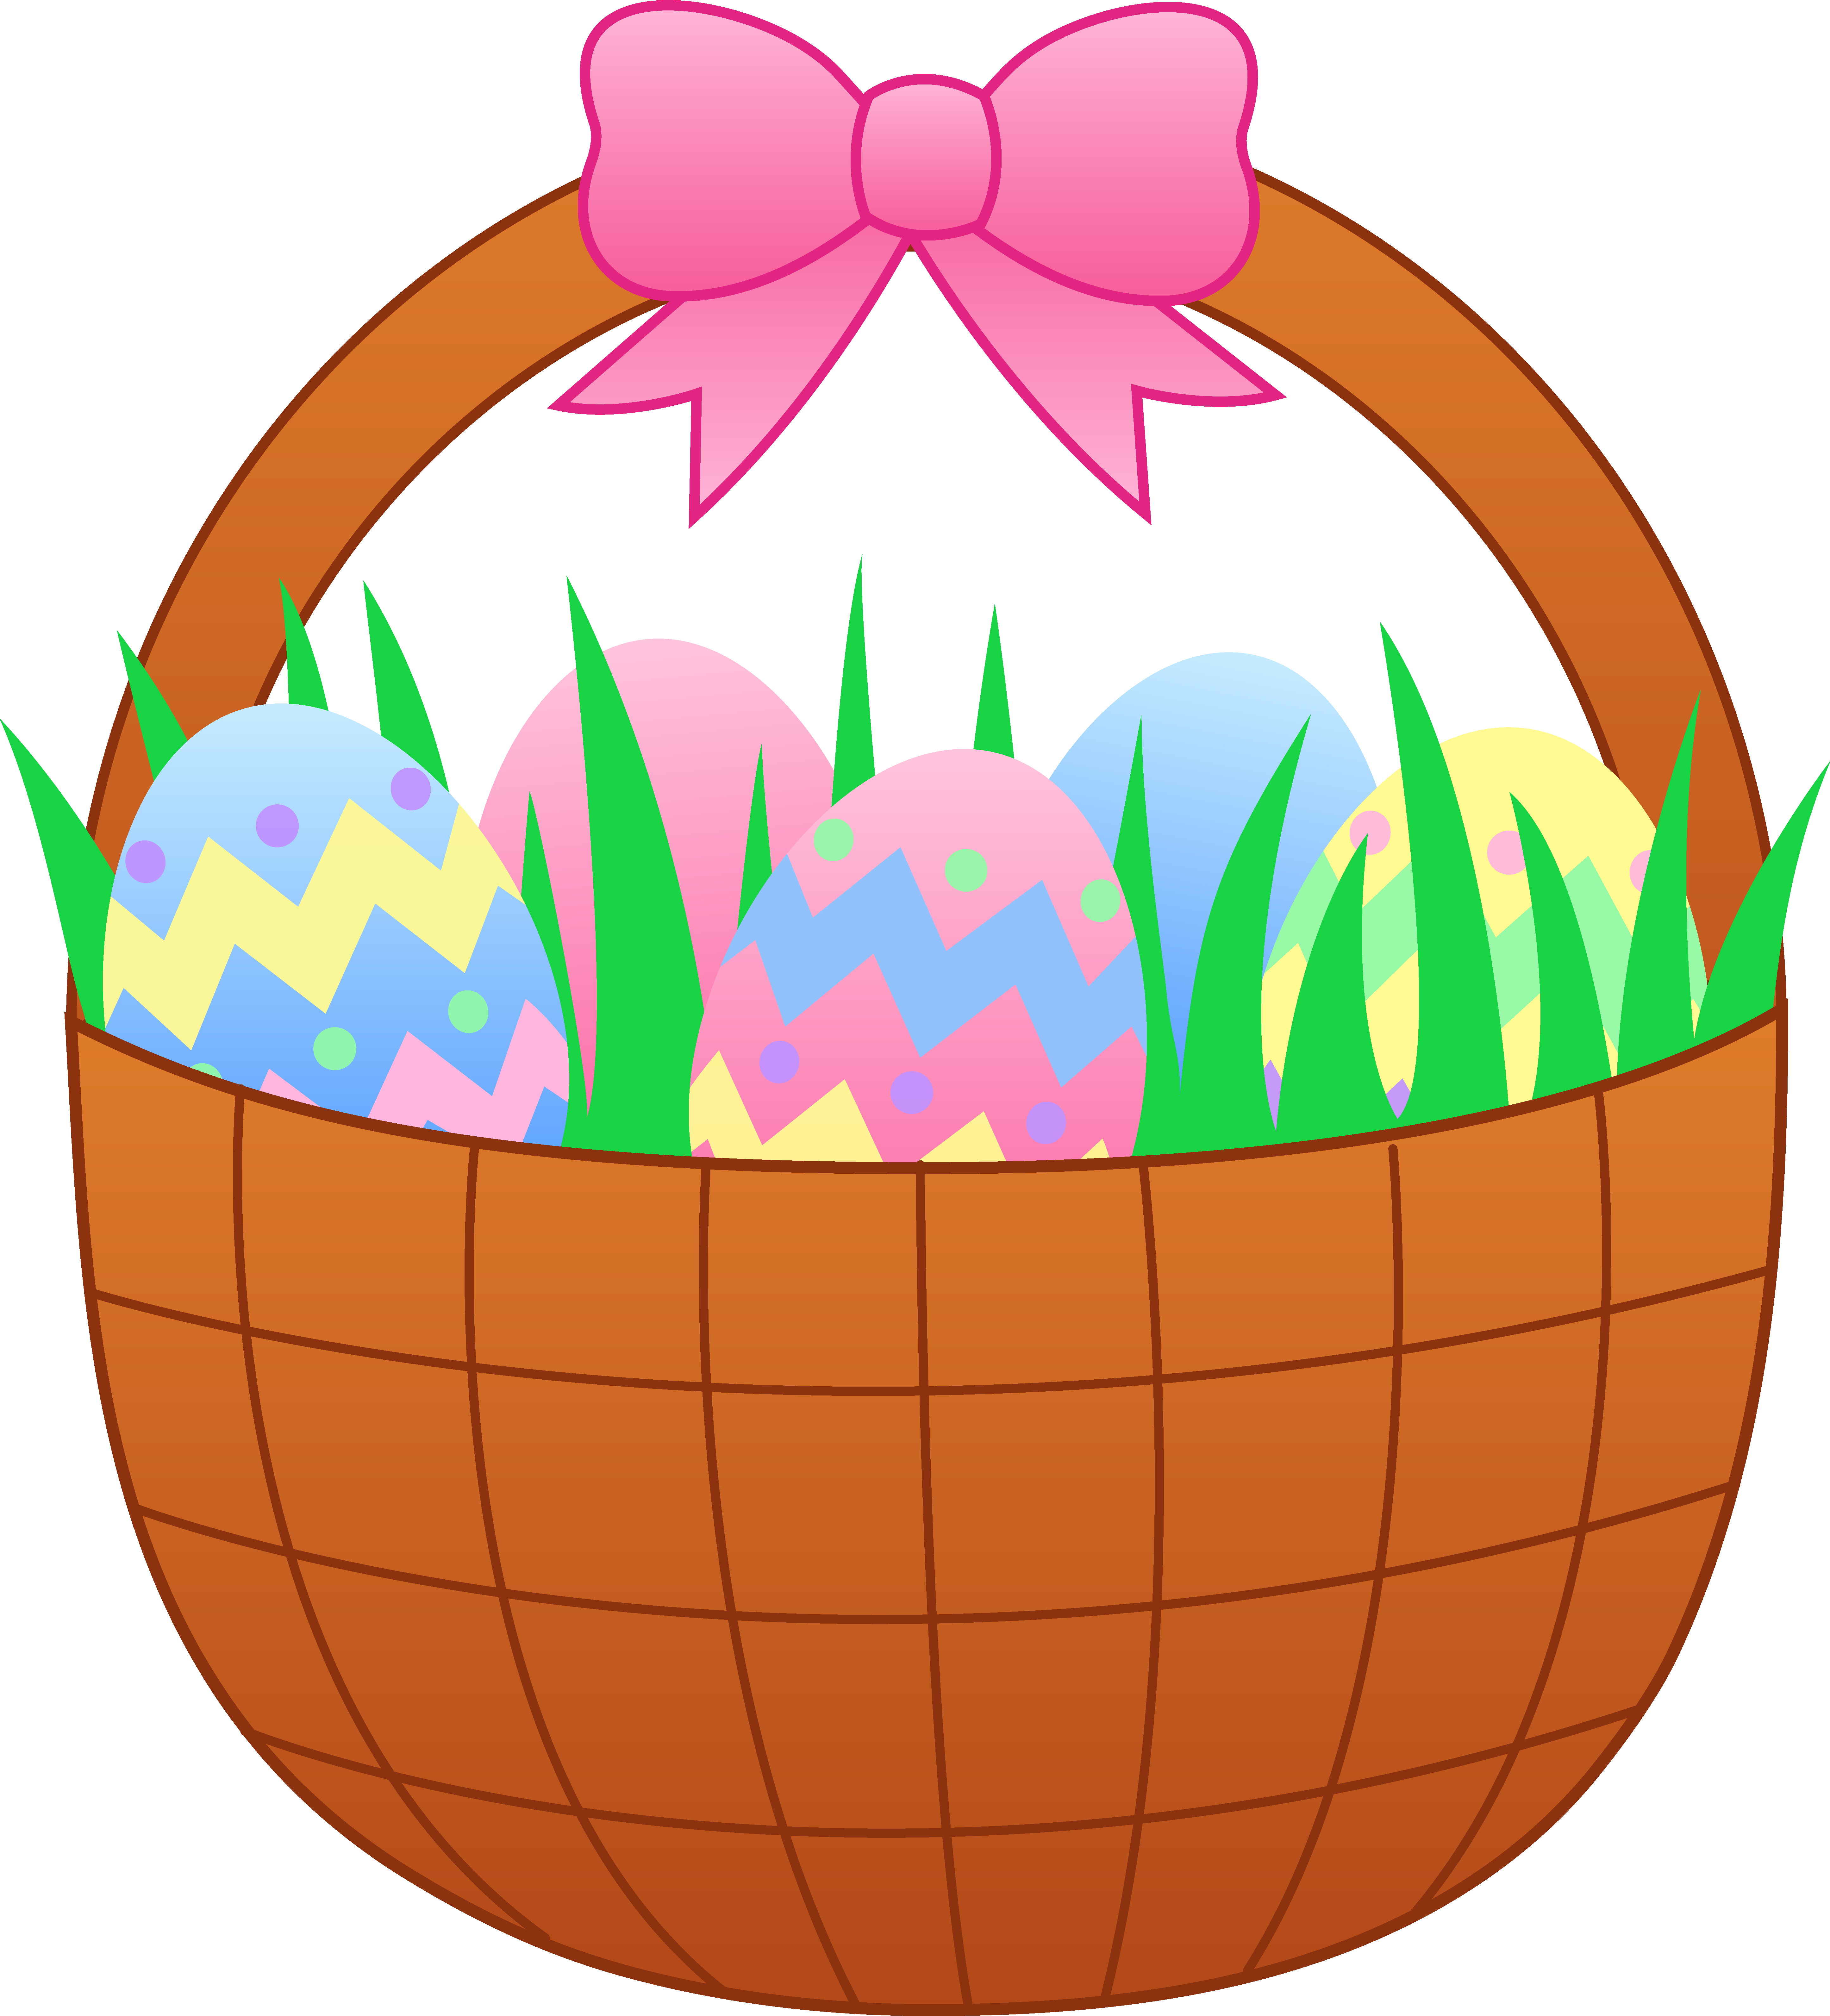 Images of Cartoon Easter Eggs - Jefney